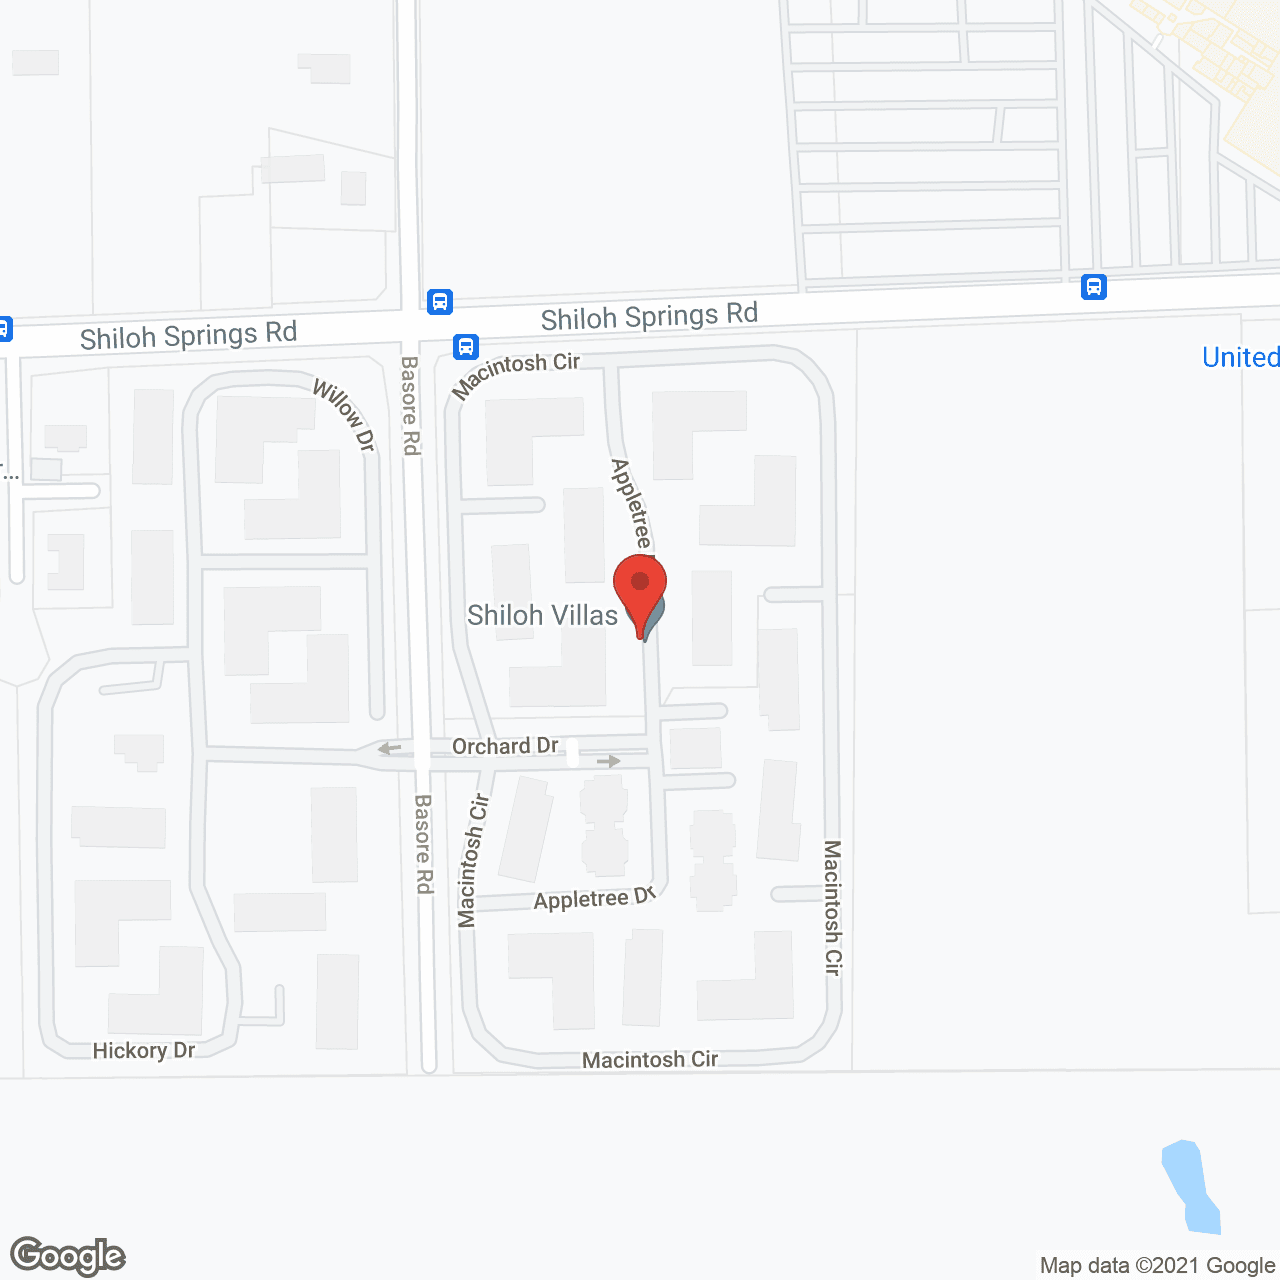 Shiloh Villas in google map